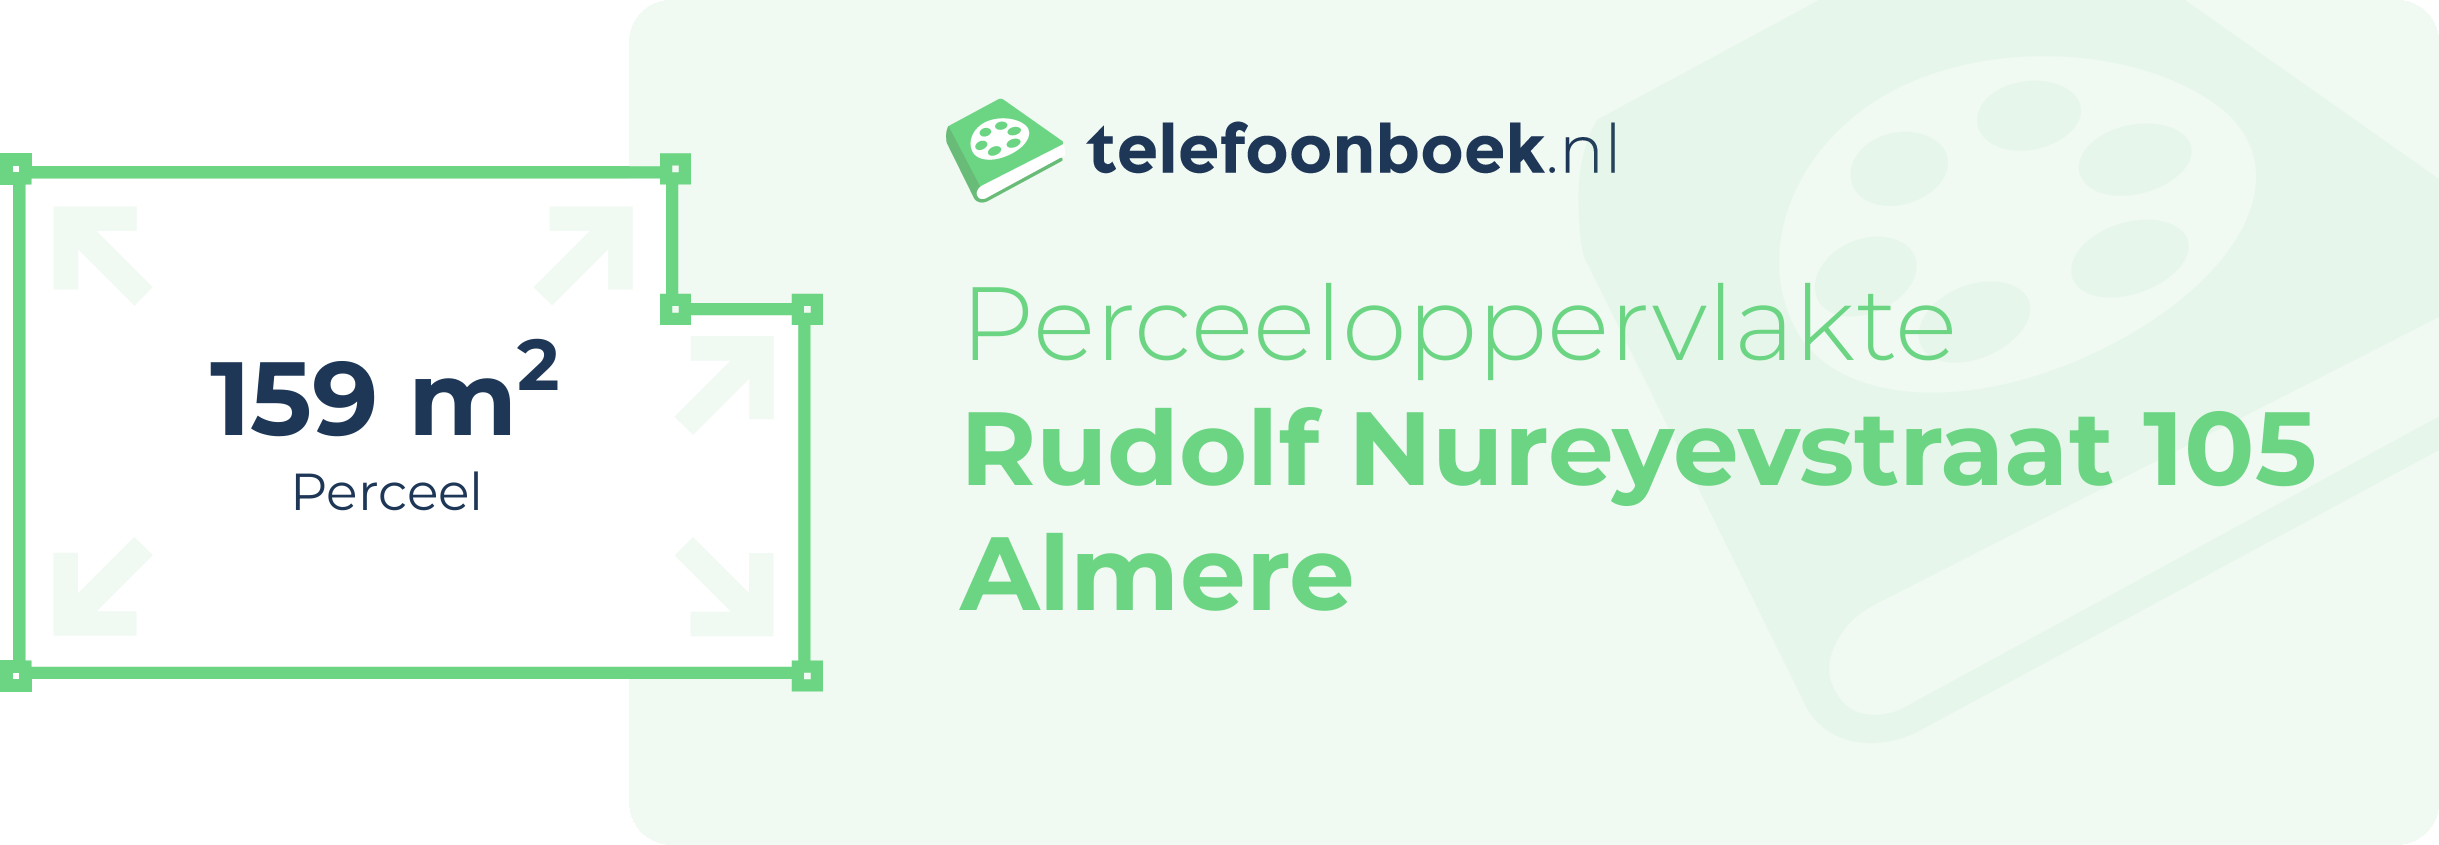 Perceeloppervlakte Rudolf Nureyevstraat 105 Almere